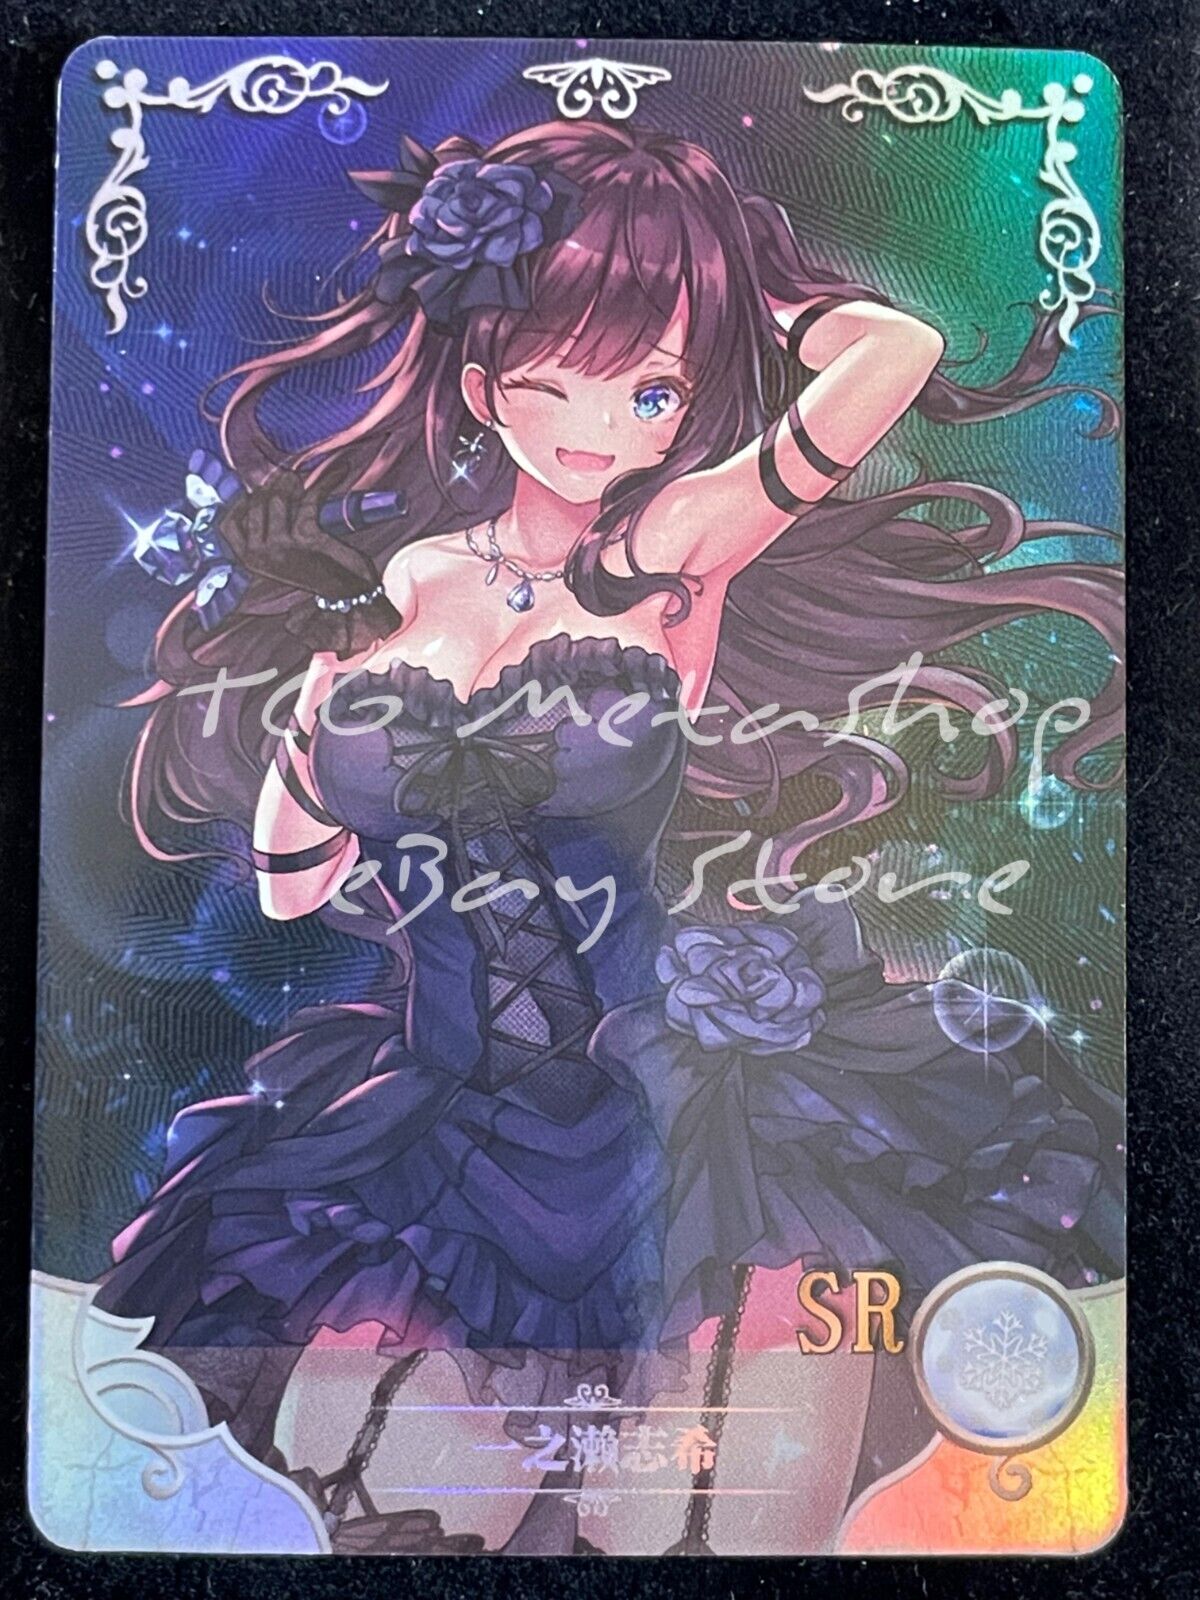 🔥 10m04  [Pick Your Singles SSR SR] Goddess Story Waifu Anime Cards 🔥